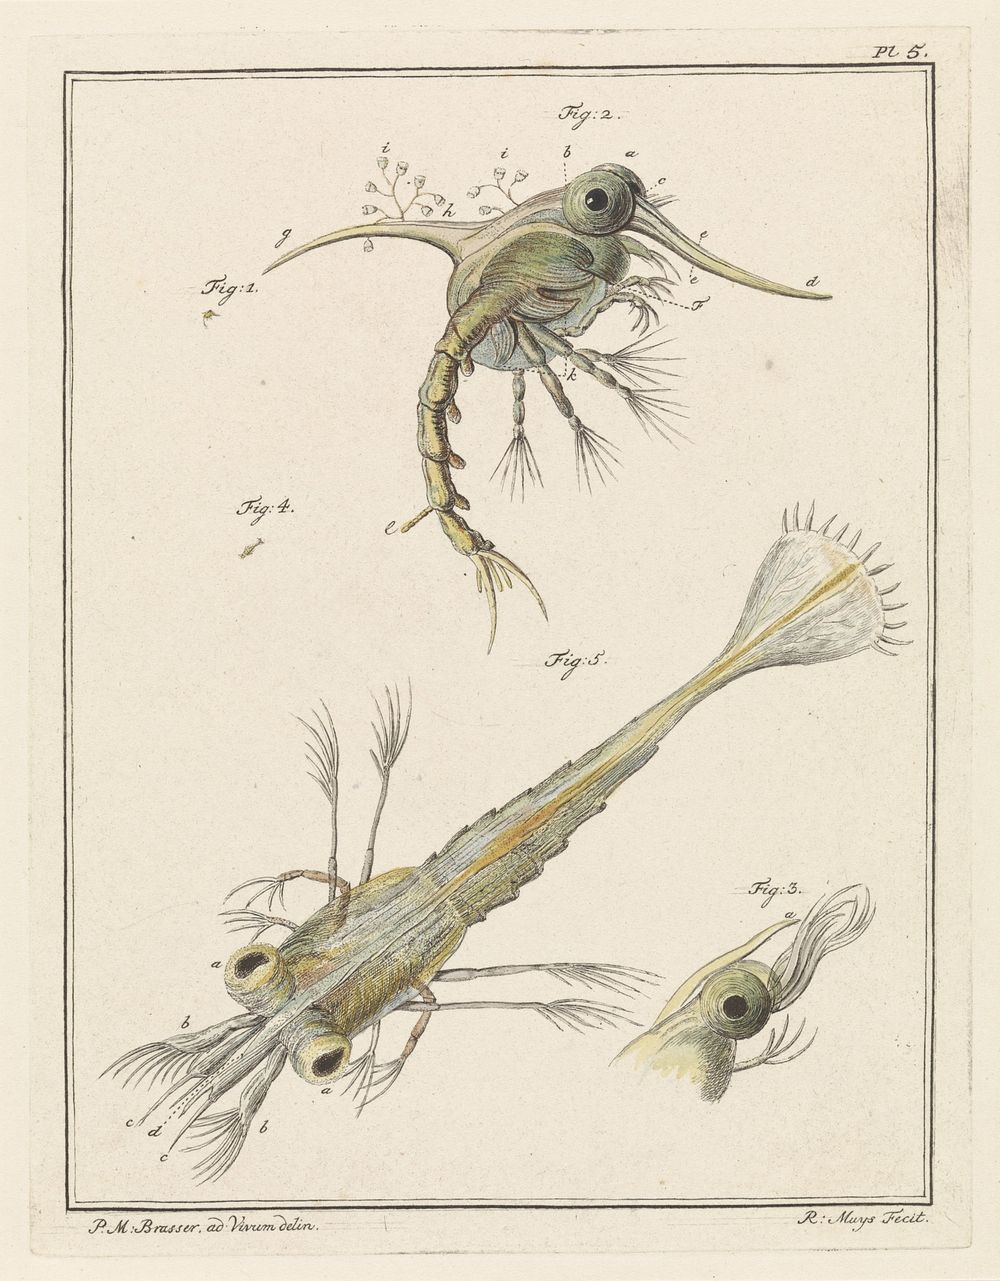 Twee ontwikkelingsstadia van de strandkrab larve (1778) by Robbert Muys and P M Brasser